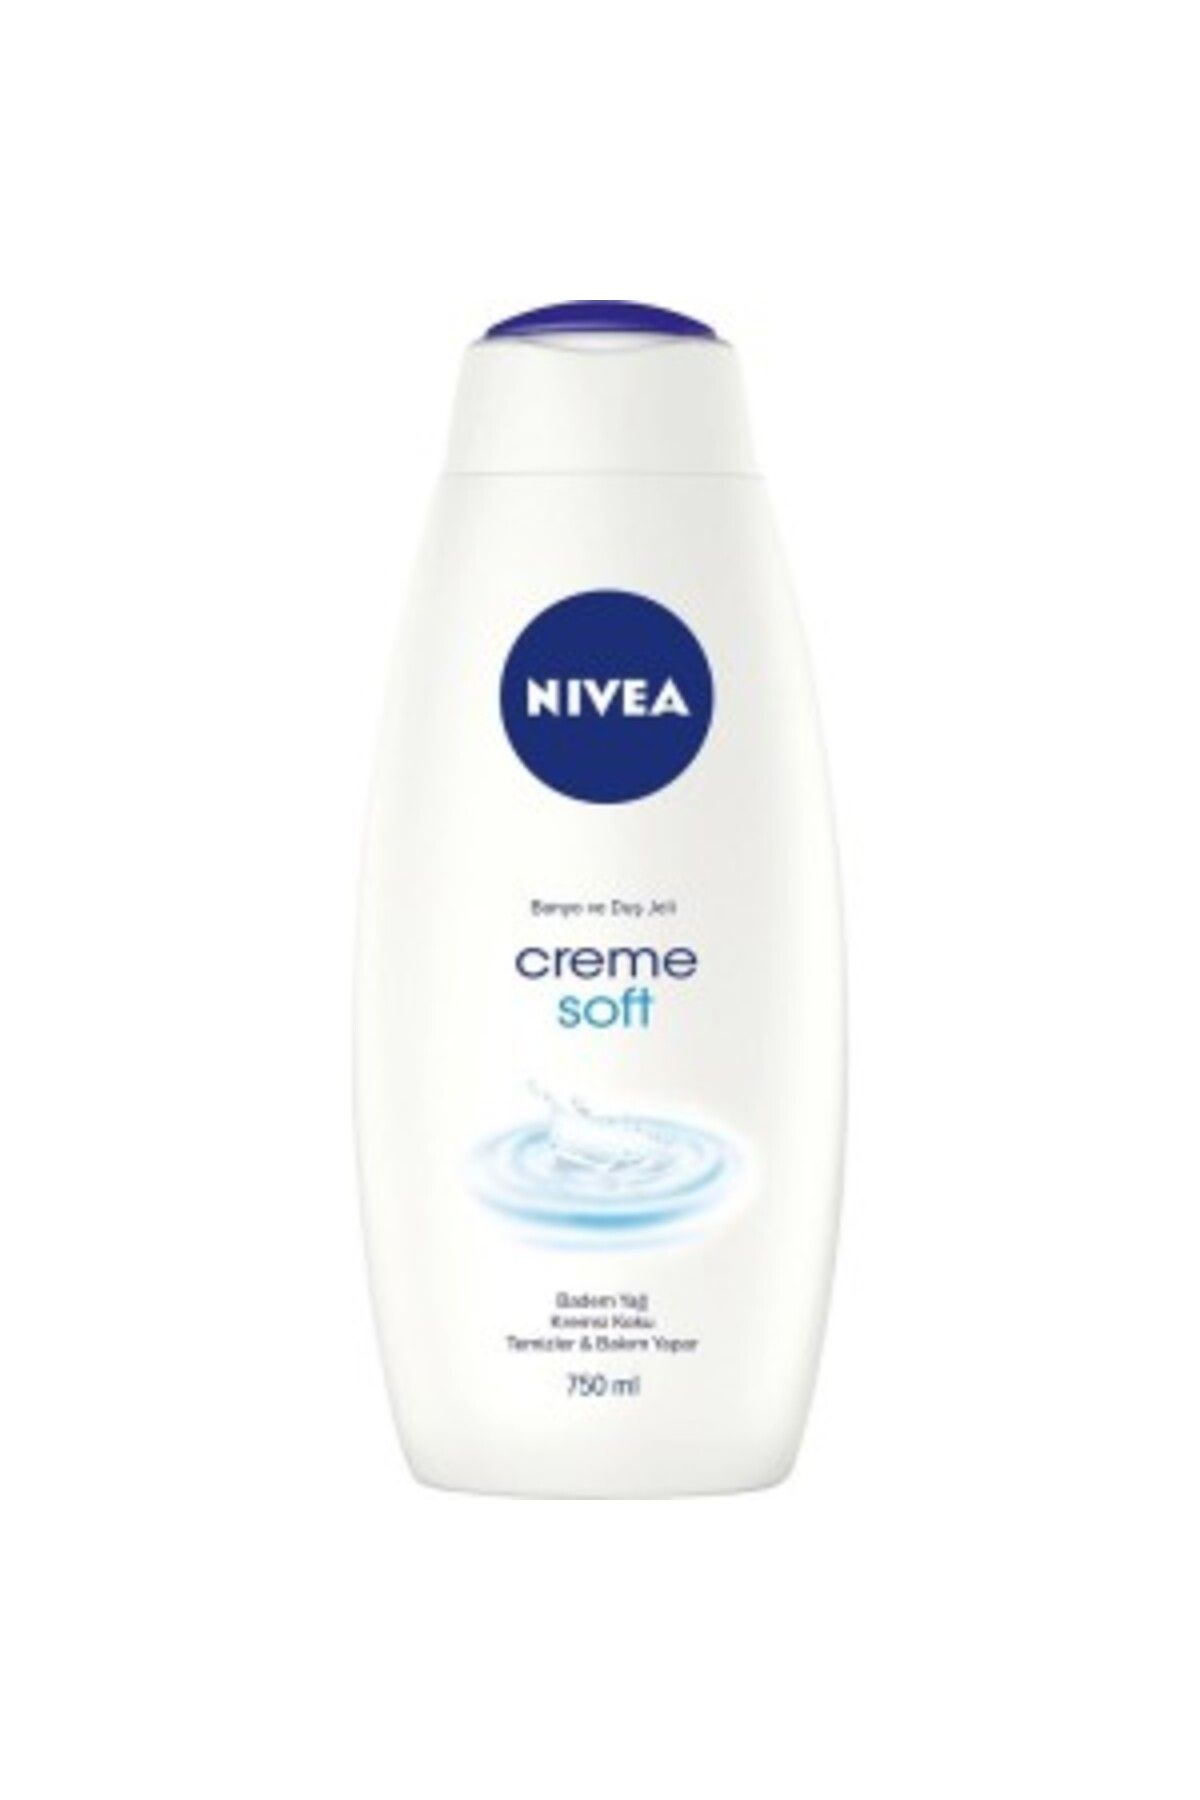 NIVEA ( 2 ADET ) Nivea Creme Soft Şampuan 750 Ml ( KÜÇÜK KOLONYA HEDİYE )